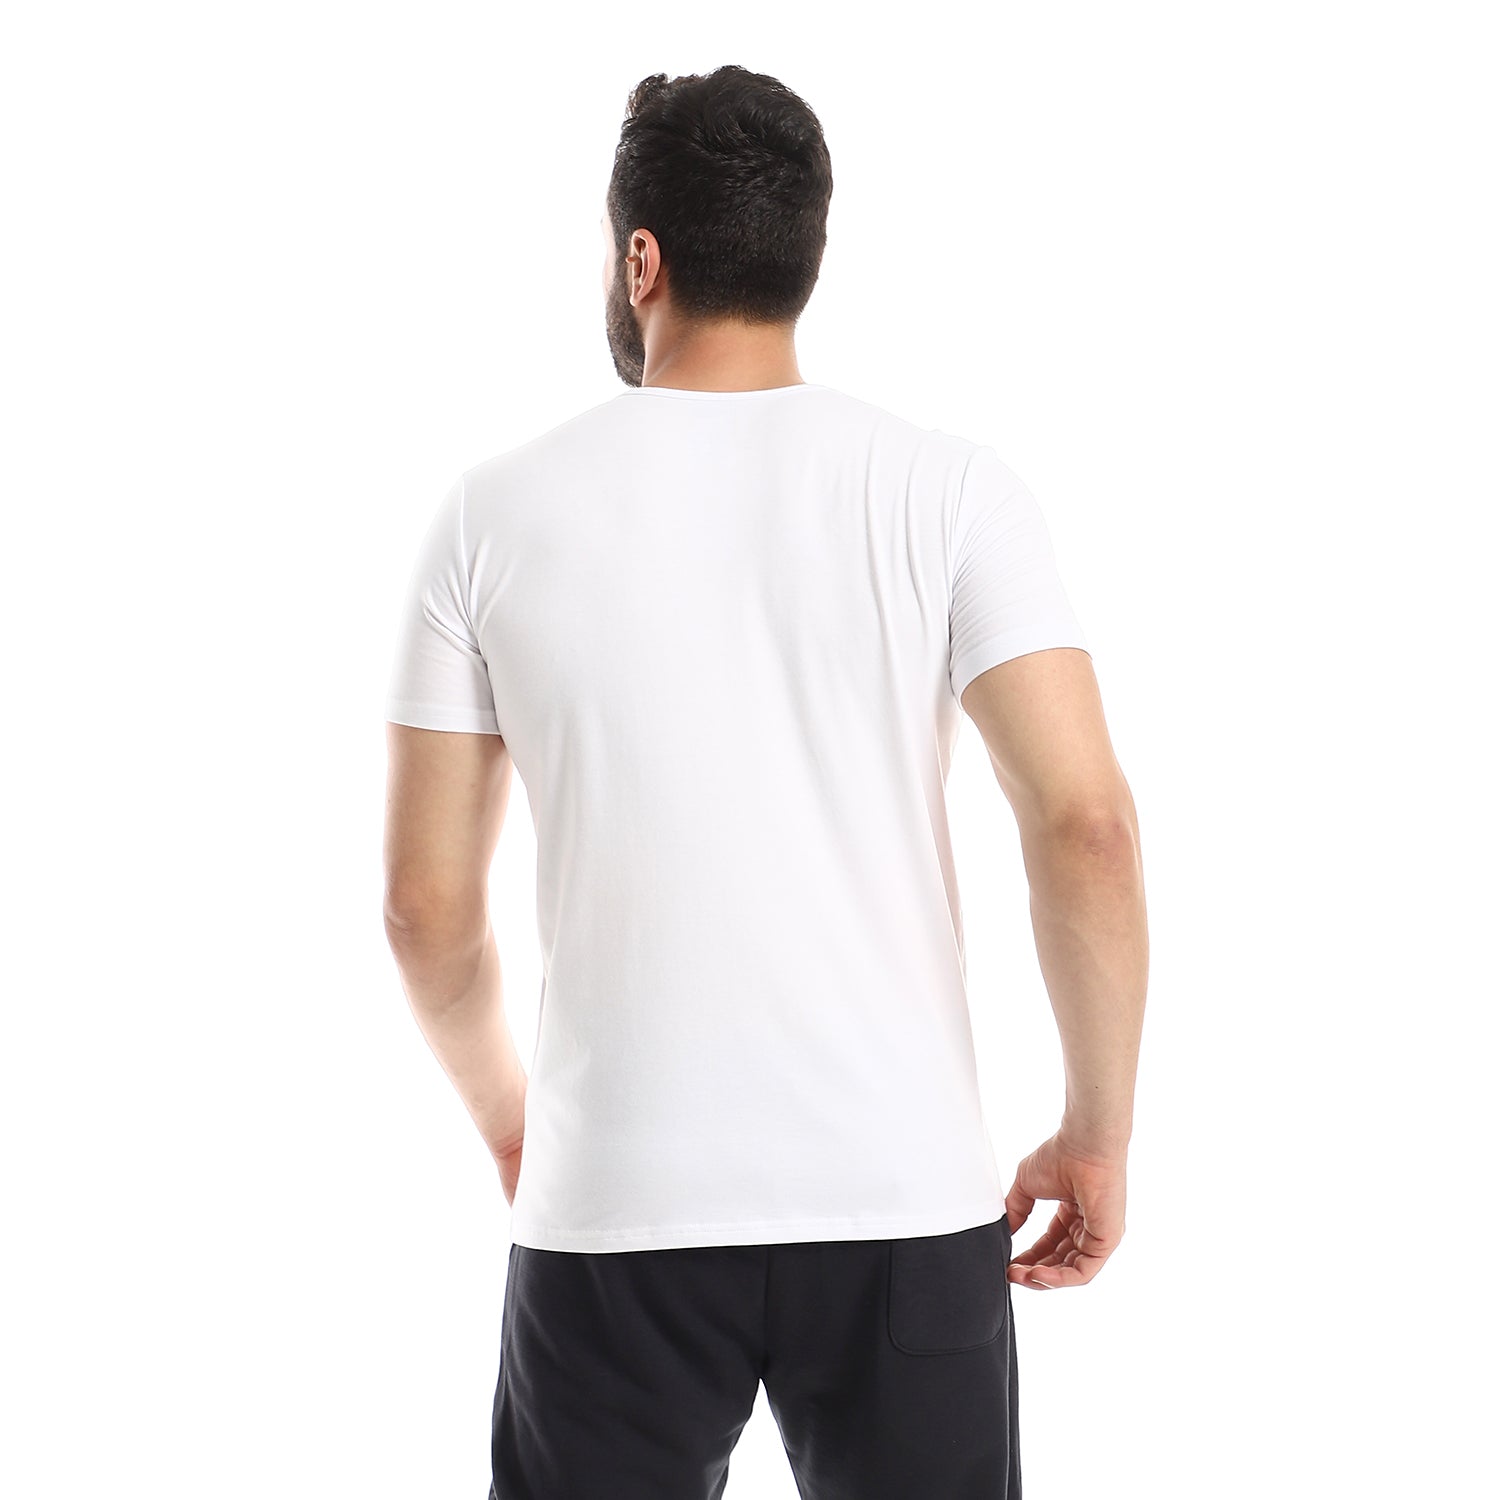 Red Cotton Short Sleeve Undershirt For Men- Round Neck, White